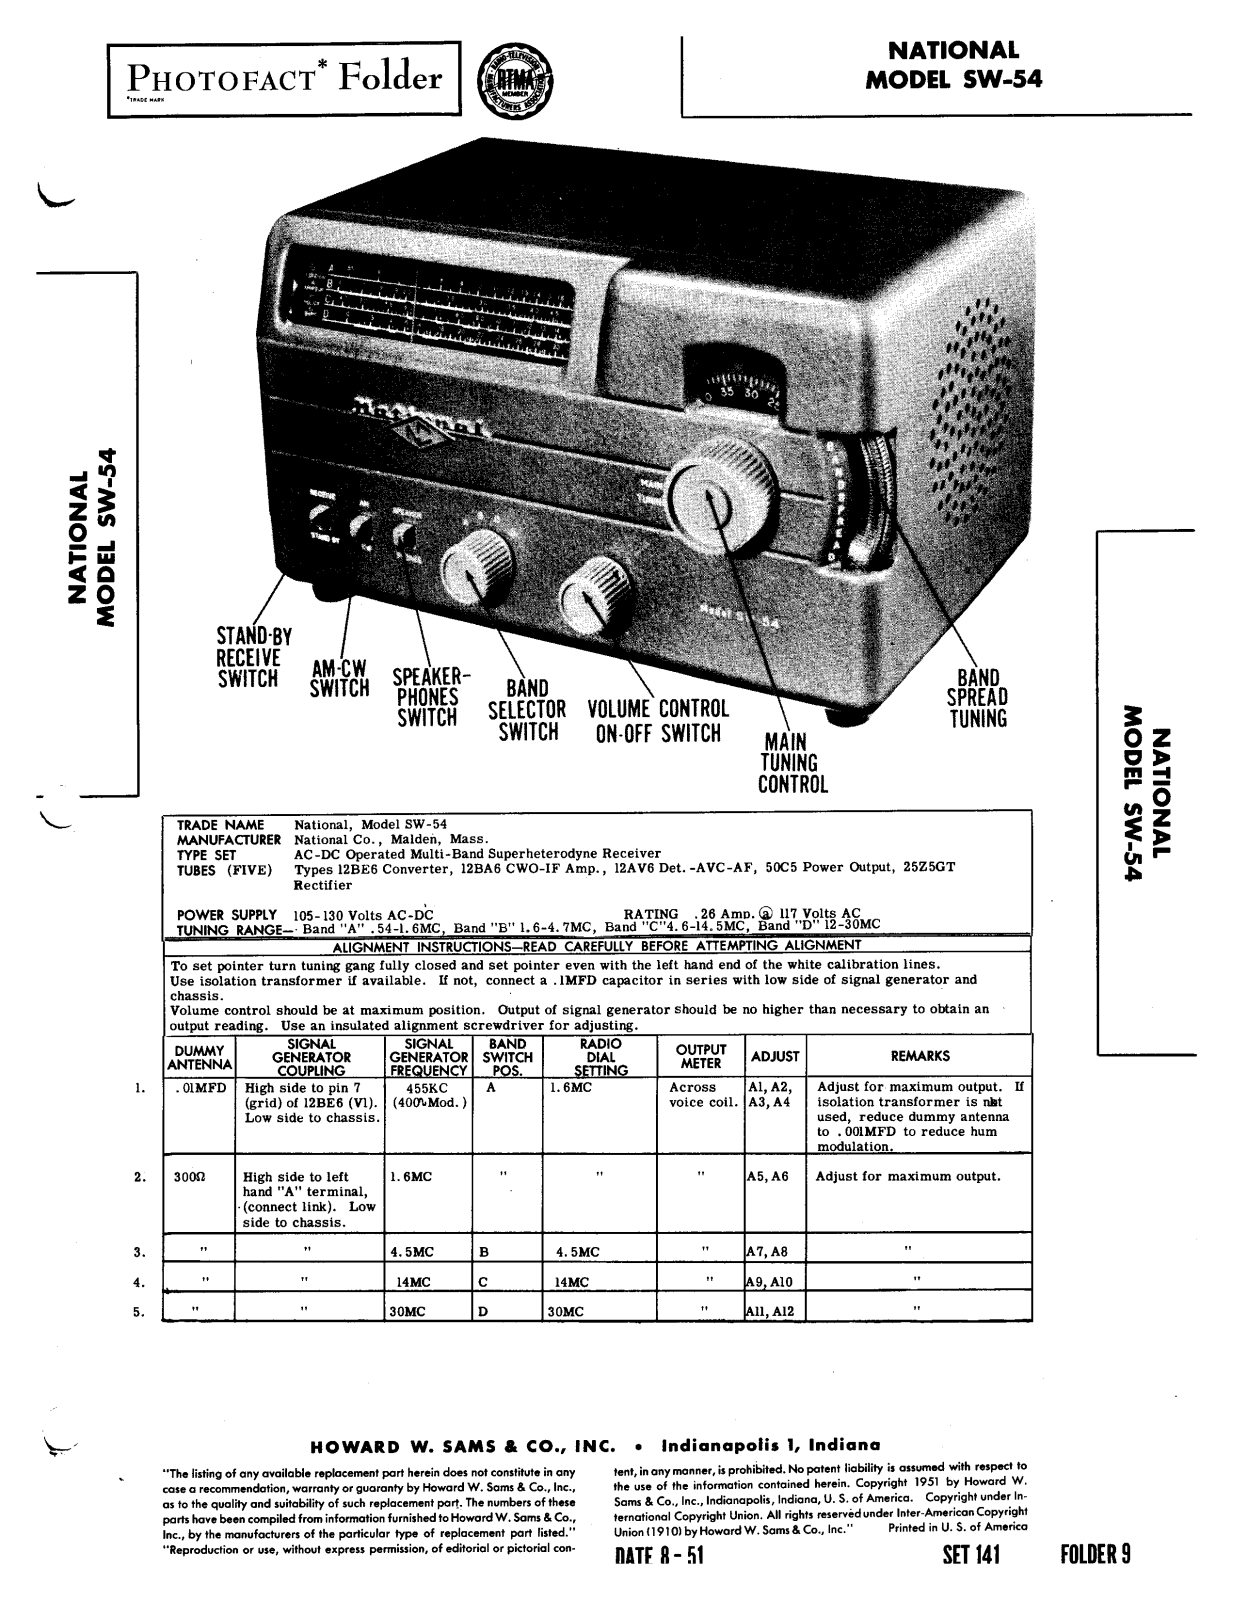 NATIONAL RADIO SW-54 User Manual